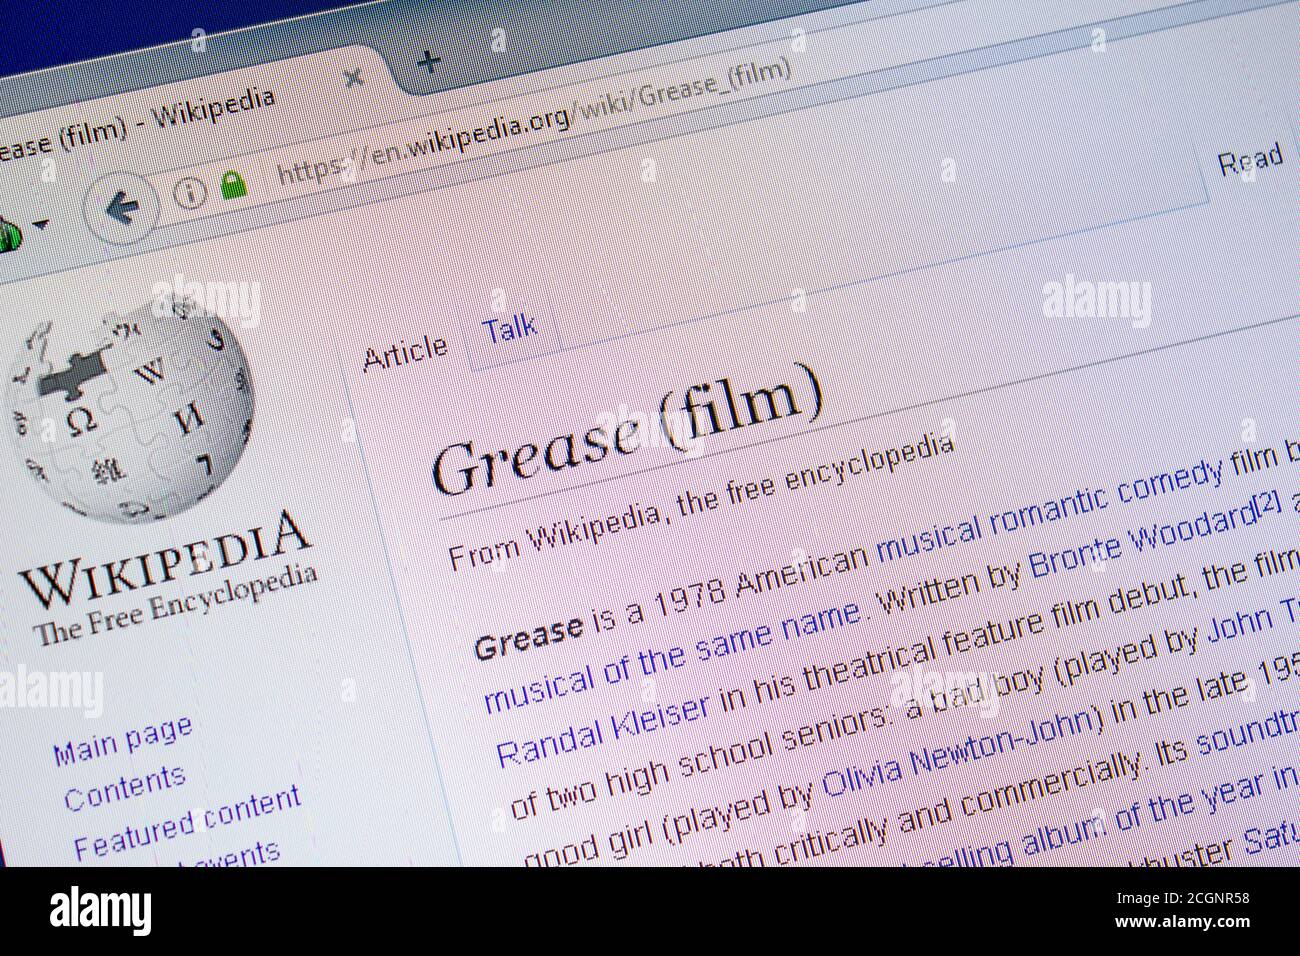 Grease (film) - Wikipedia